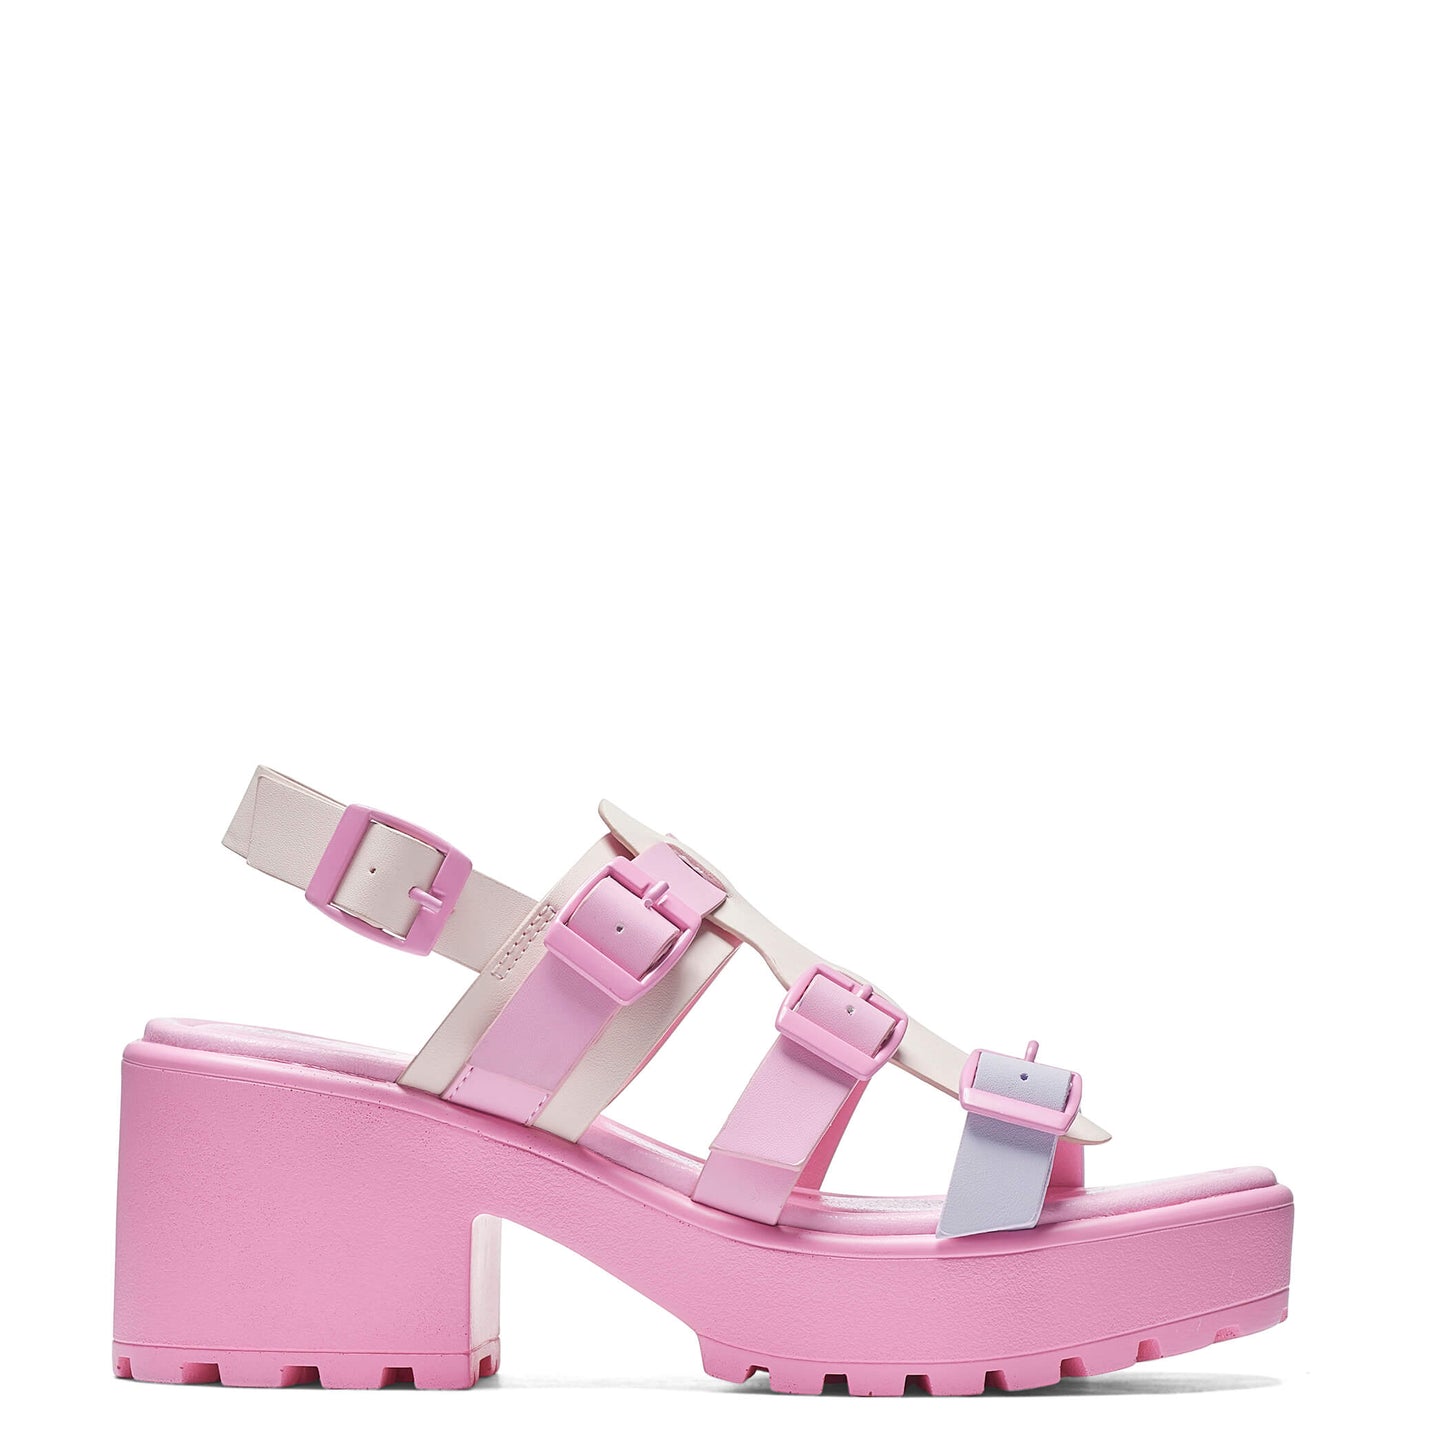 Sugar Season Chunky Buckle Sandals - Pink - Sandals - KOI Footwear - Pink - Main View